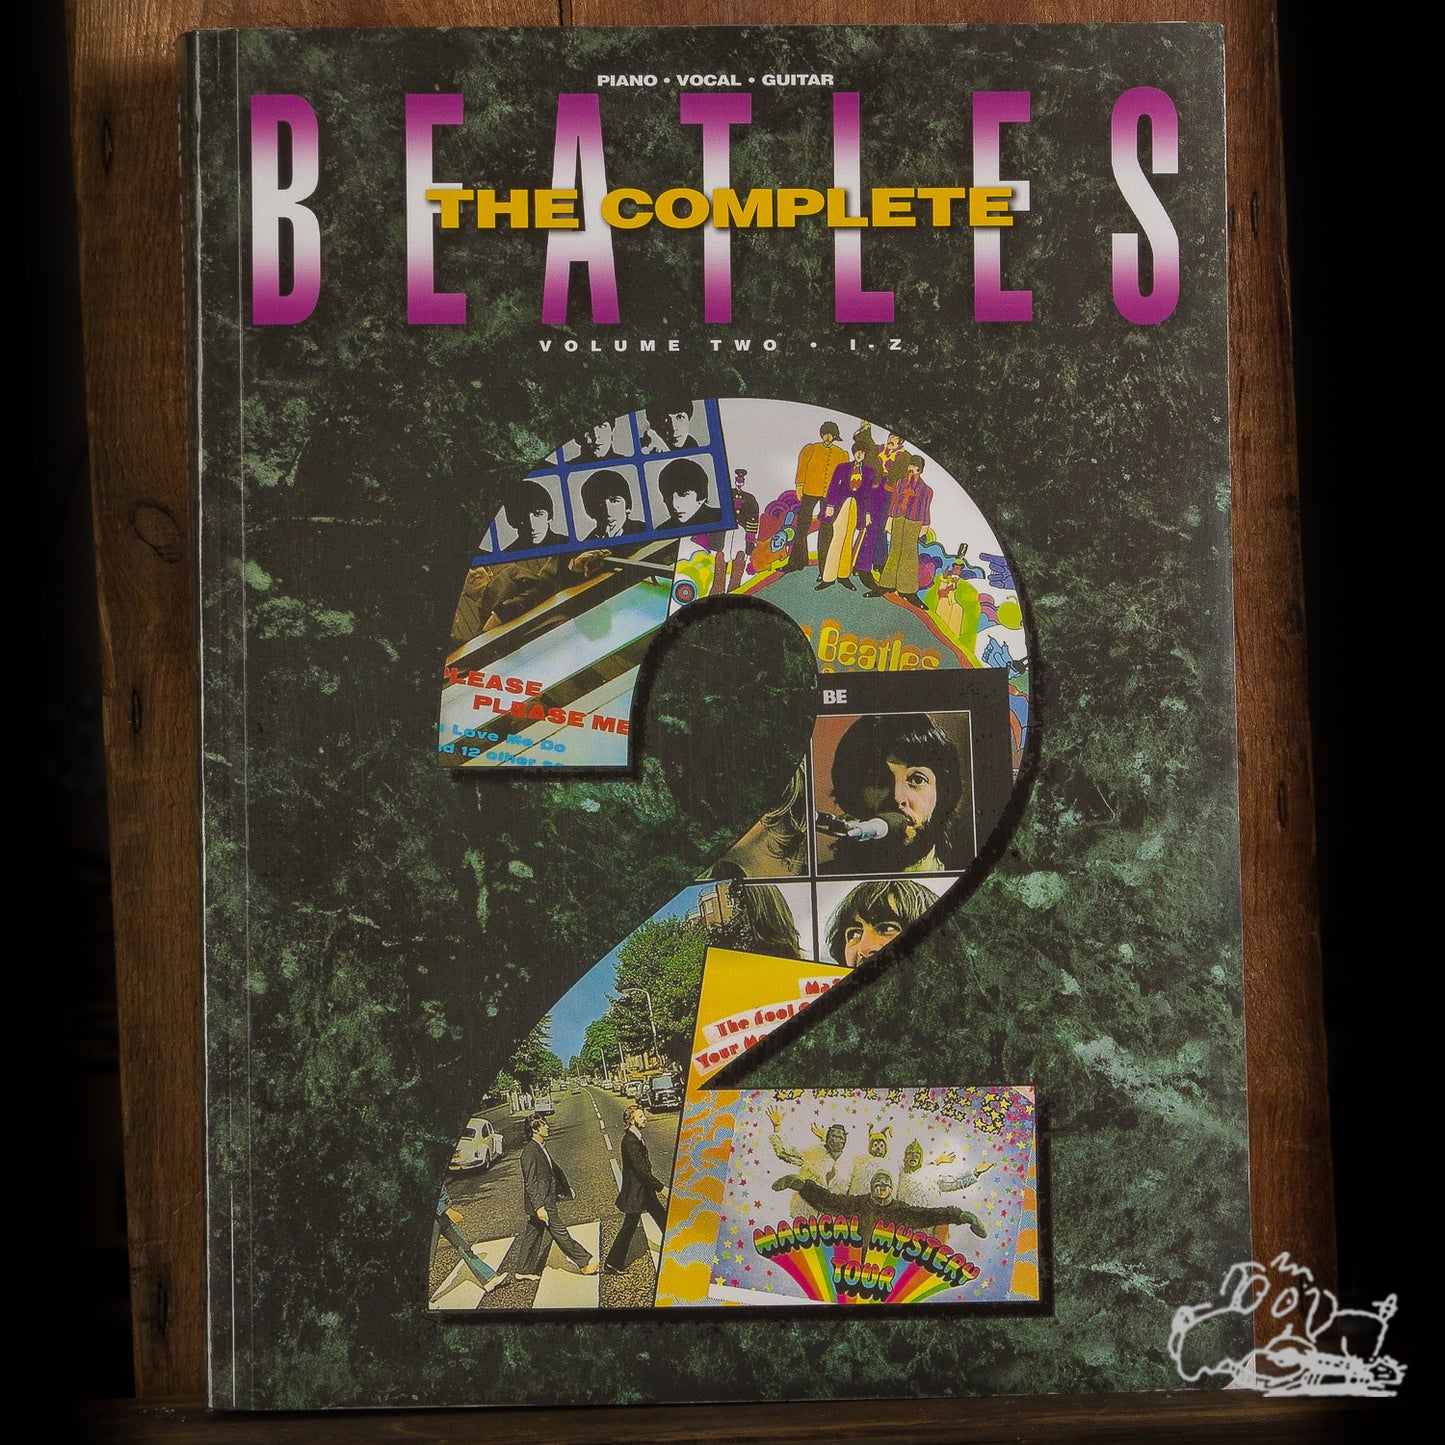 The Complete Beatles Vol. 2 I-Z Piano/Vocal/Guitar